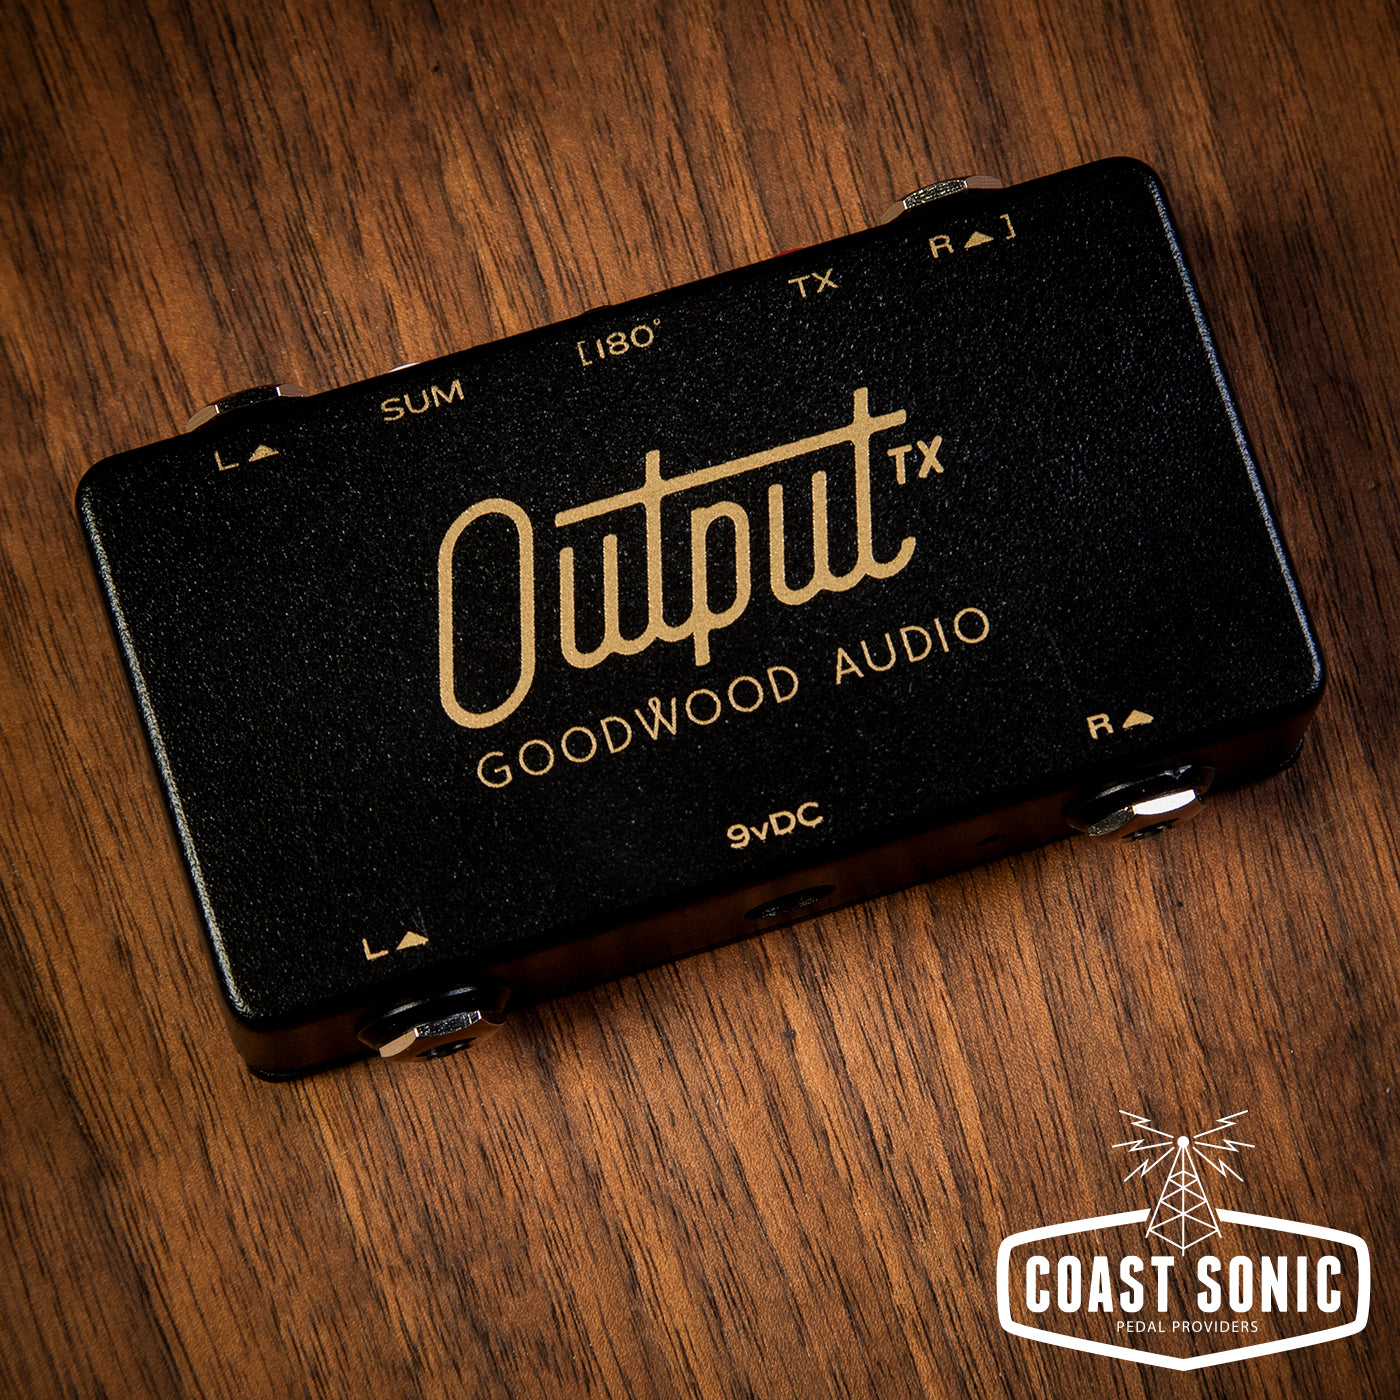 Goodwood Audio Output TX